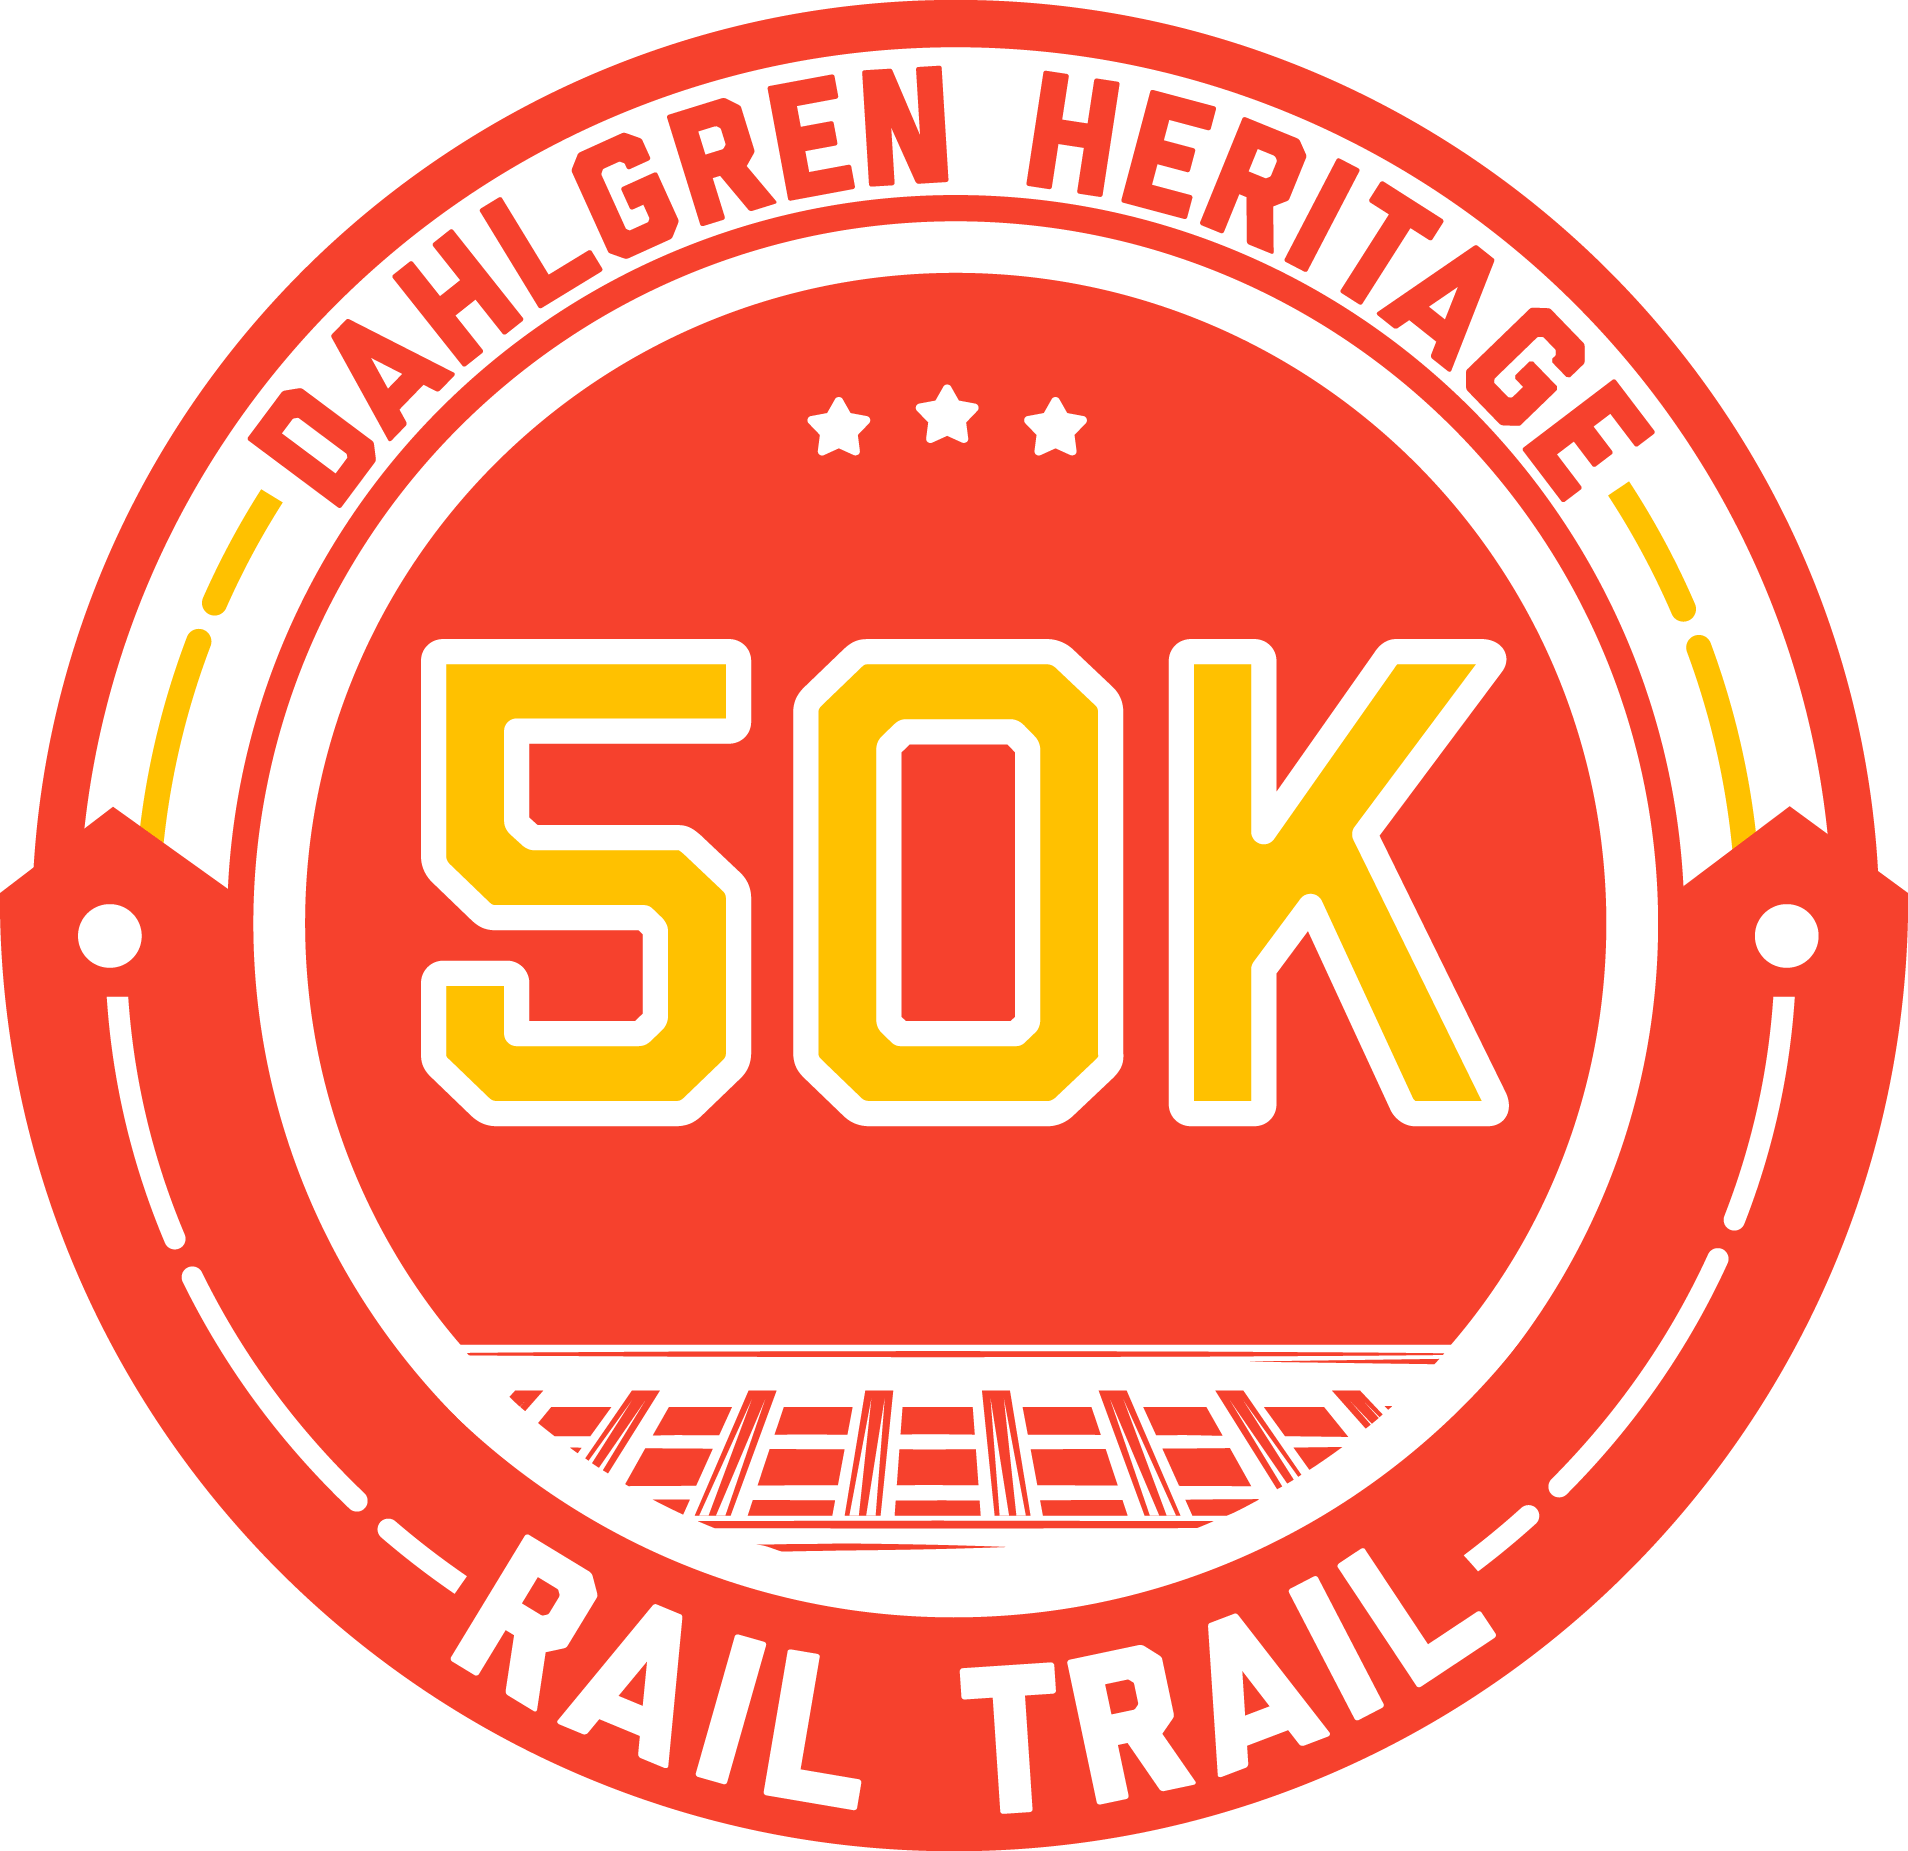 dahlgren-heritage-rail-trail-logo_5HkFUdN